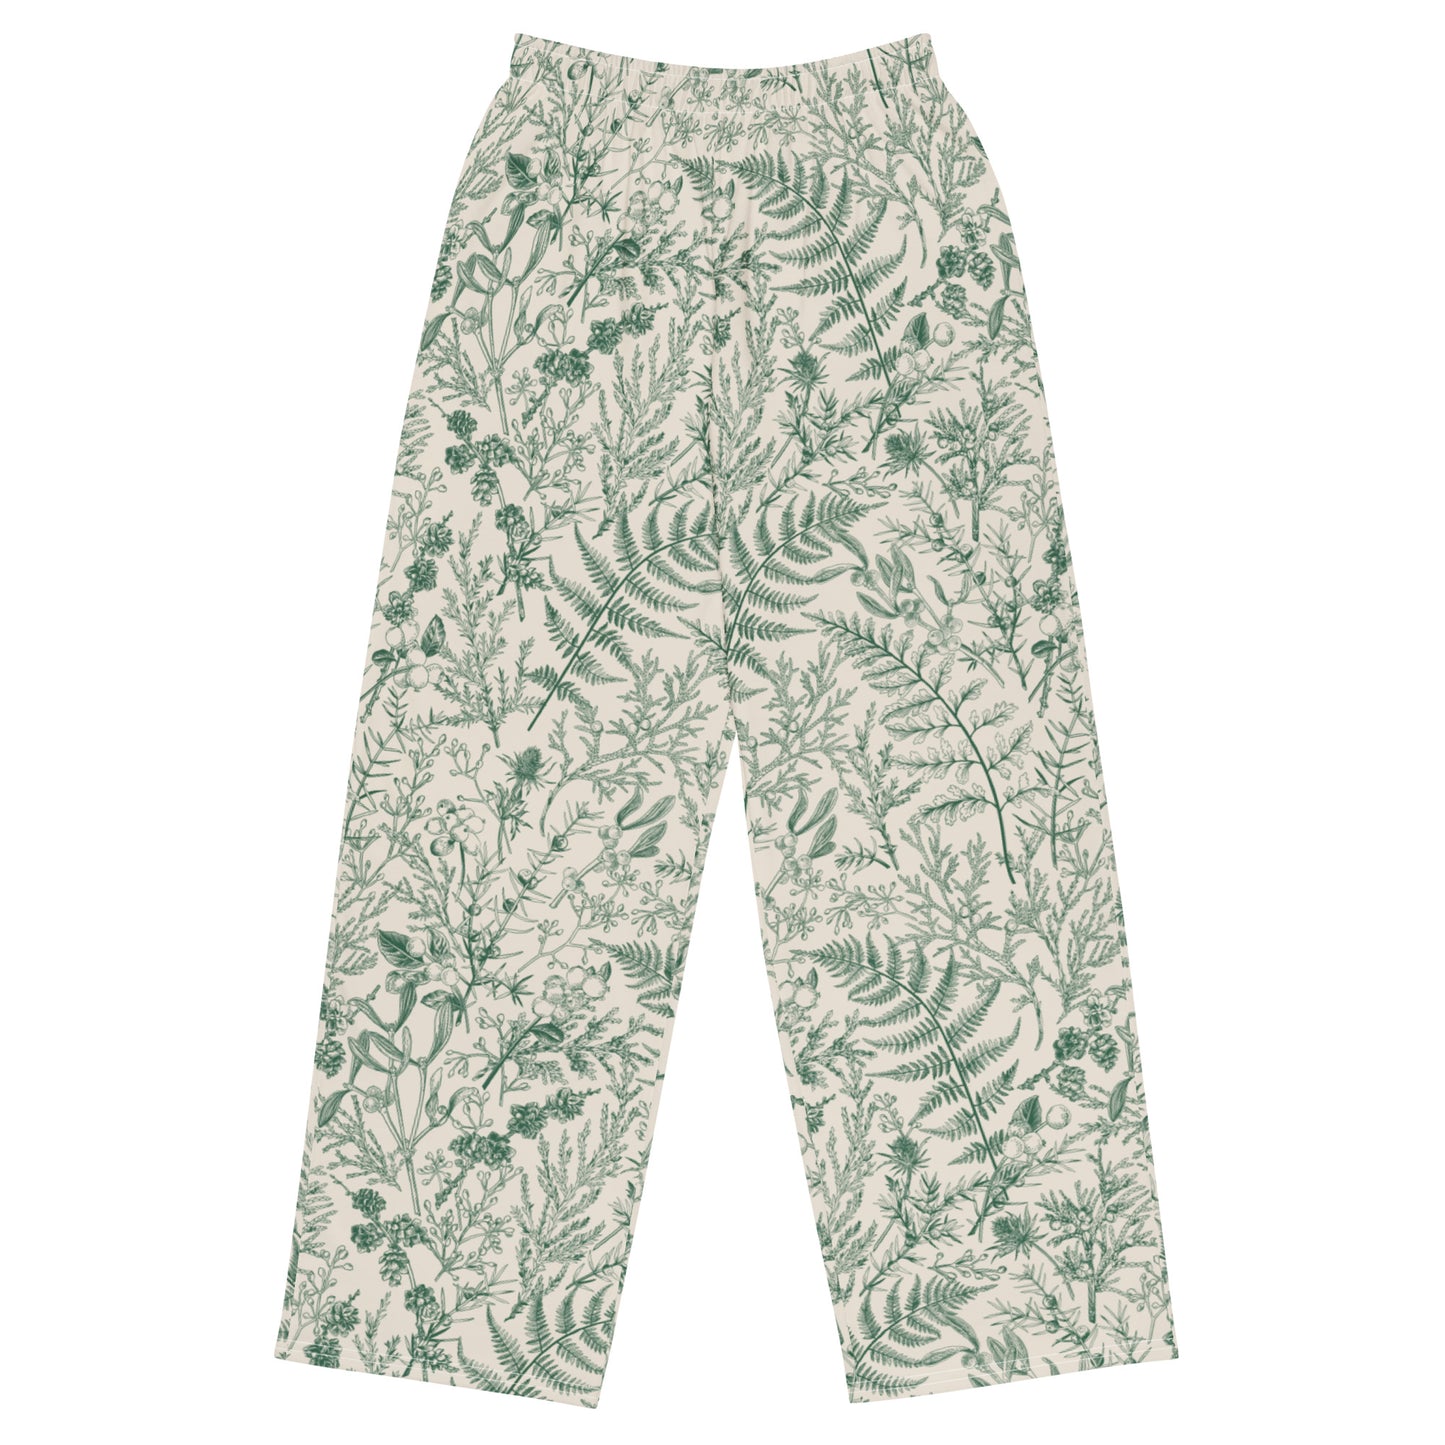 Metsä / Forest - Casual wide-leg pants - Pants- Print N Stuff - [designed in Turku Finland]